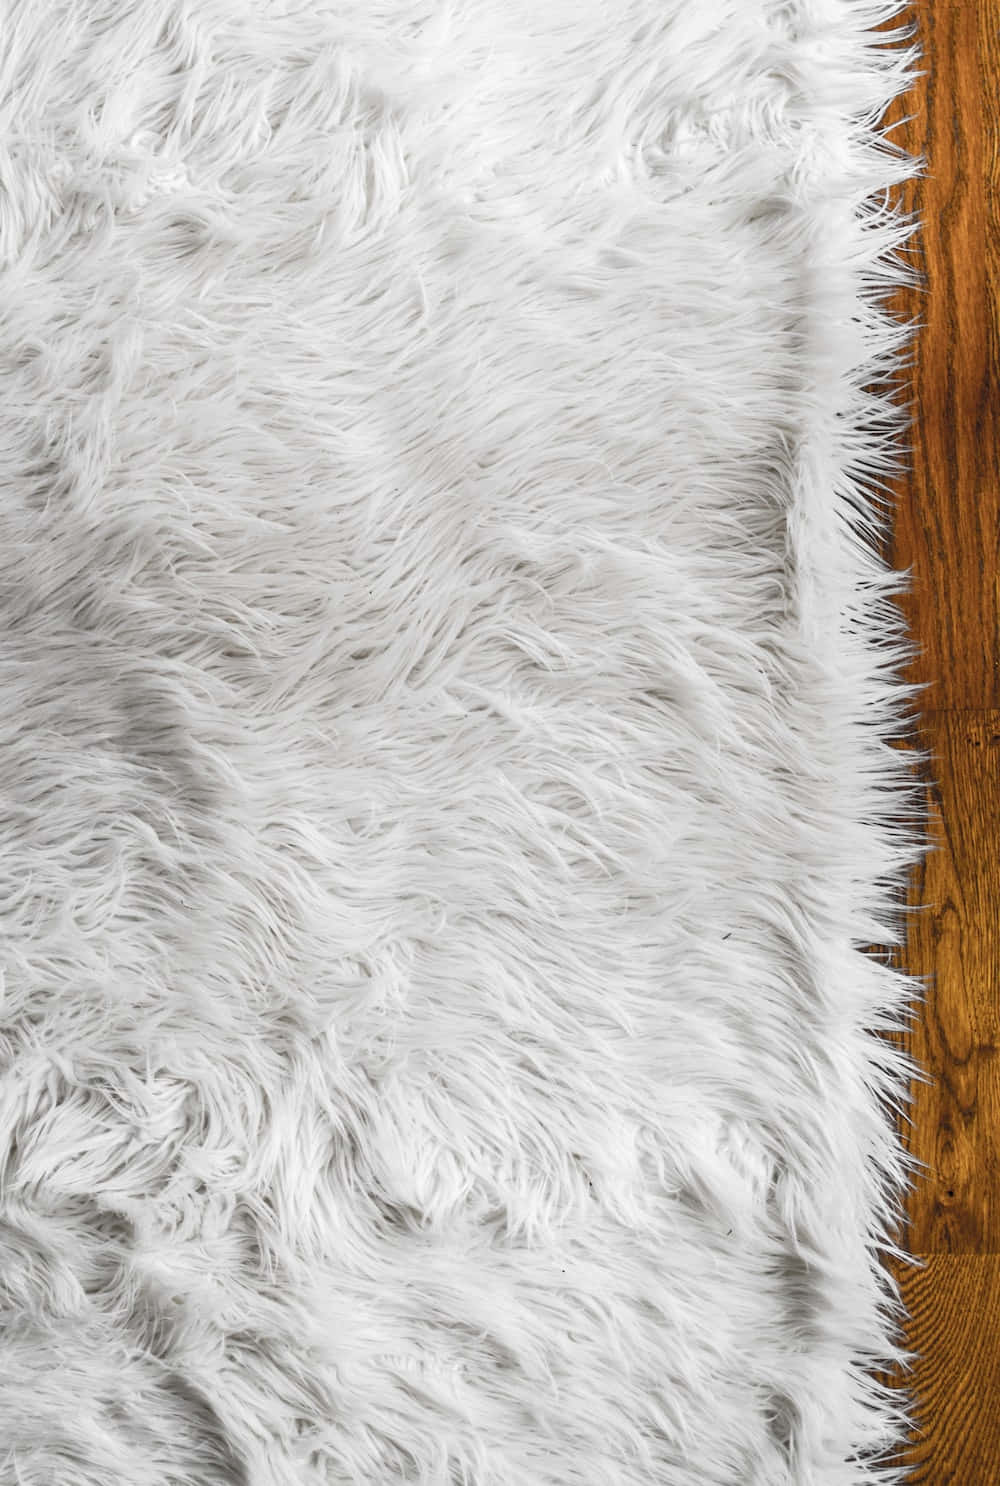 Luxurious White Fur Texture For Chic Interior Decor